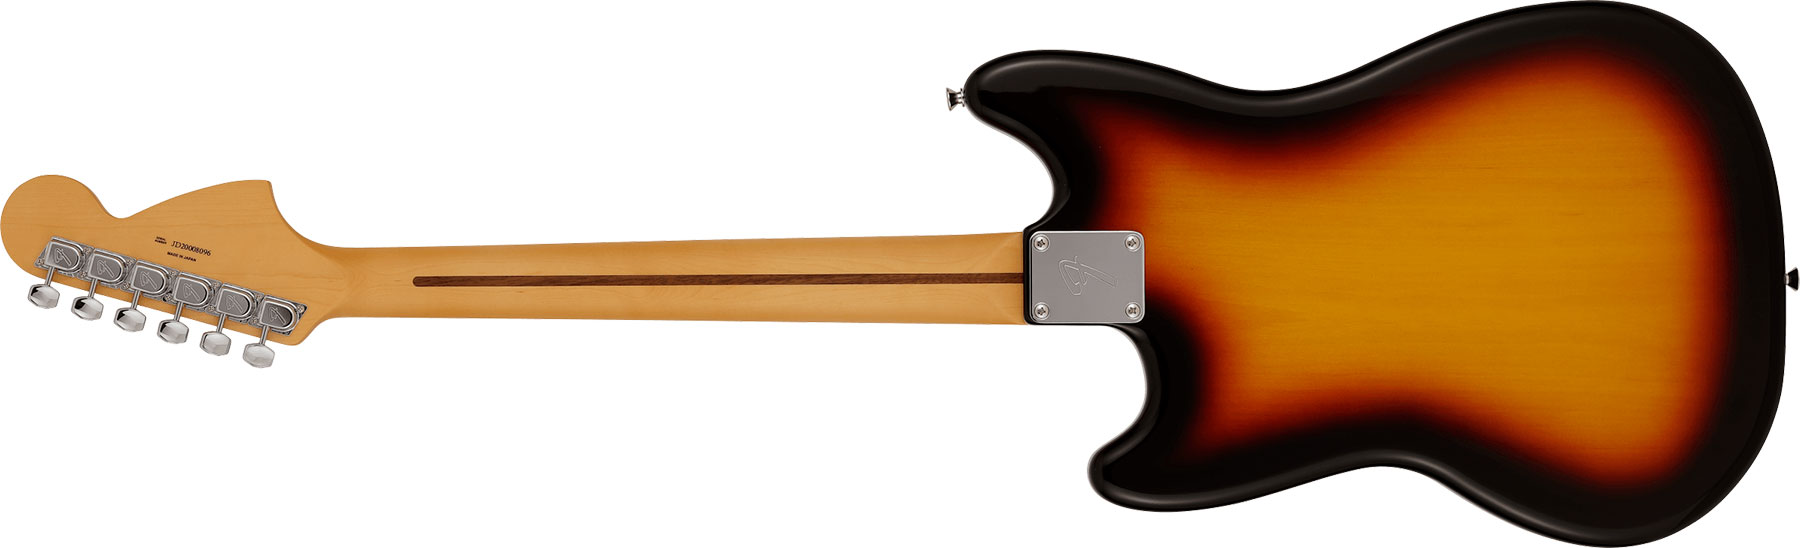 Fender Mustang Reverse Headstock Traditional Ltd Jap Hs Trem Rw - 3-color Sunburst - Guitarra eléctrica con forma de str. - Variation 1